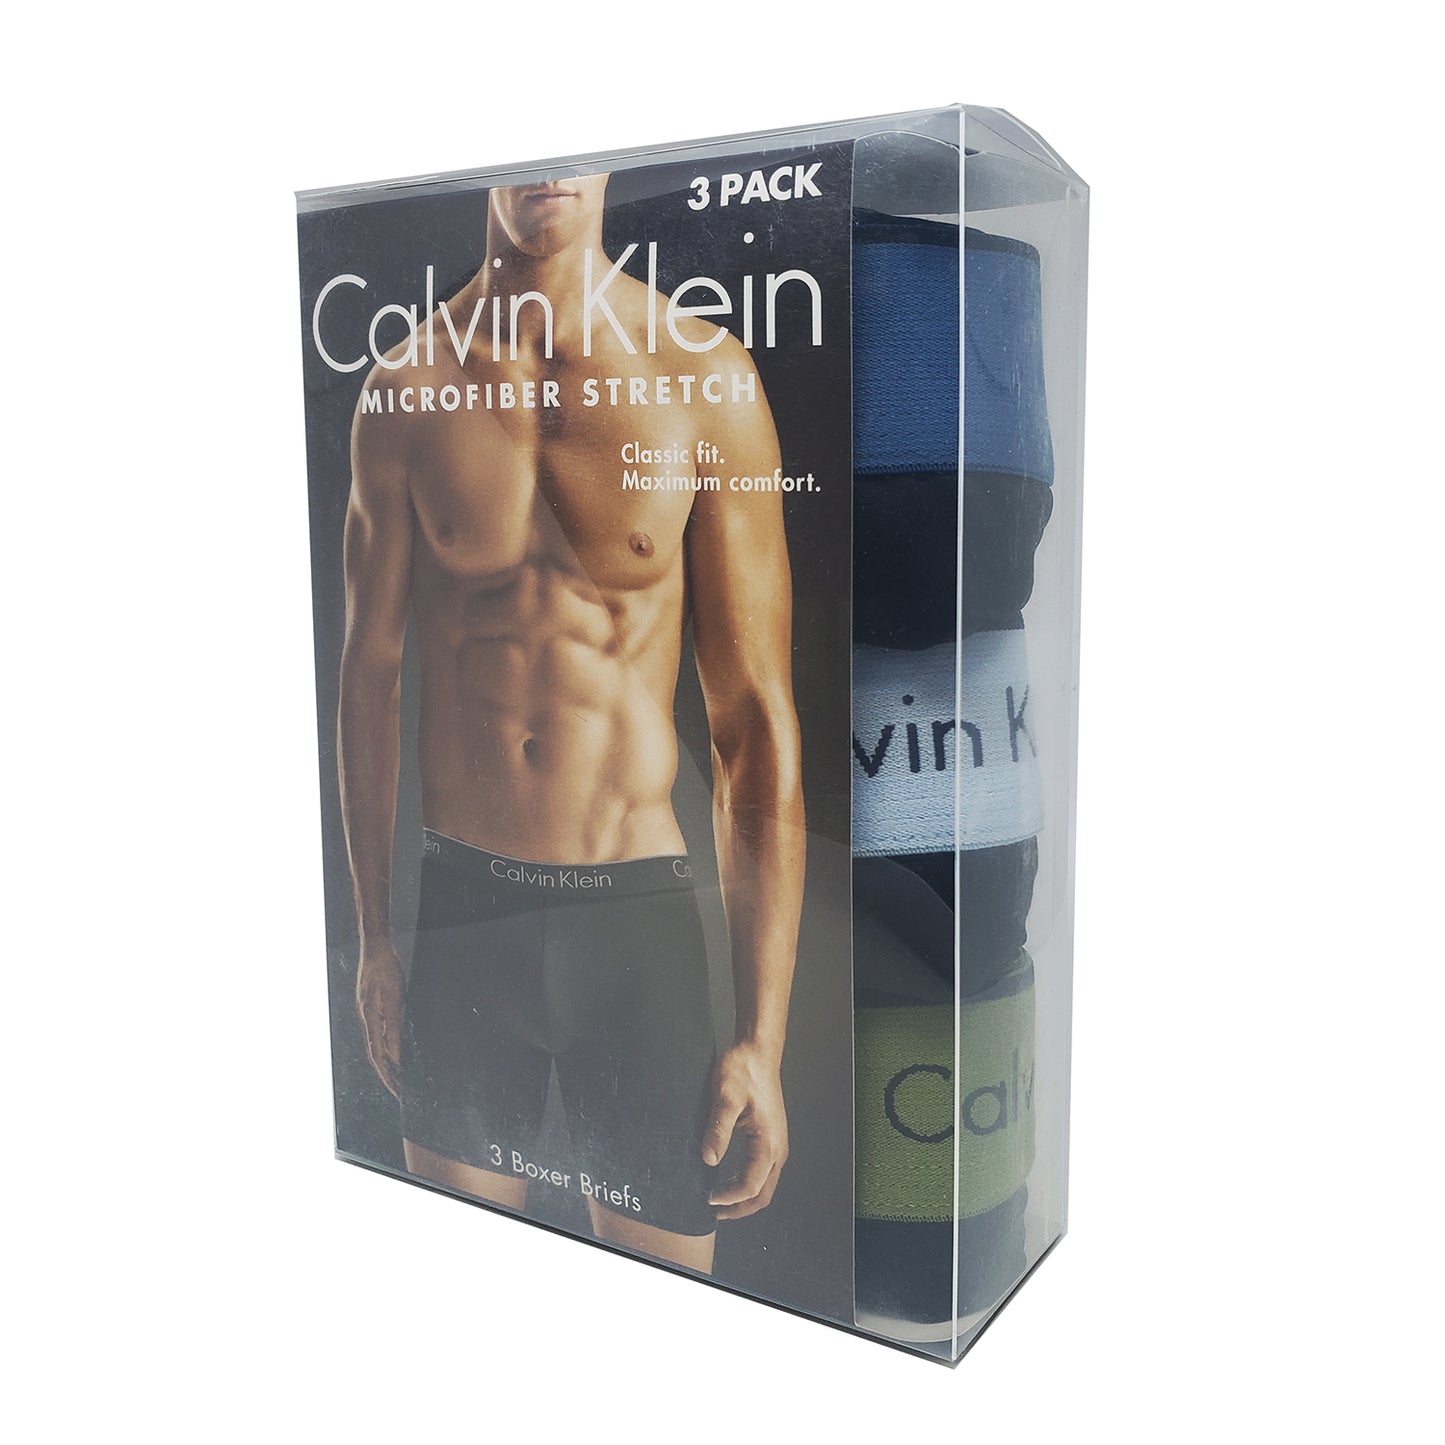 Microfiber Stretch boxer briefs 3-pack, Calvin Klein